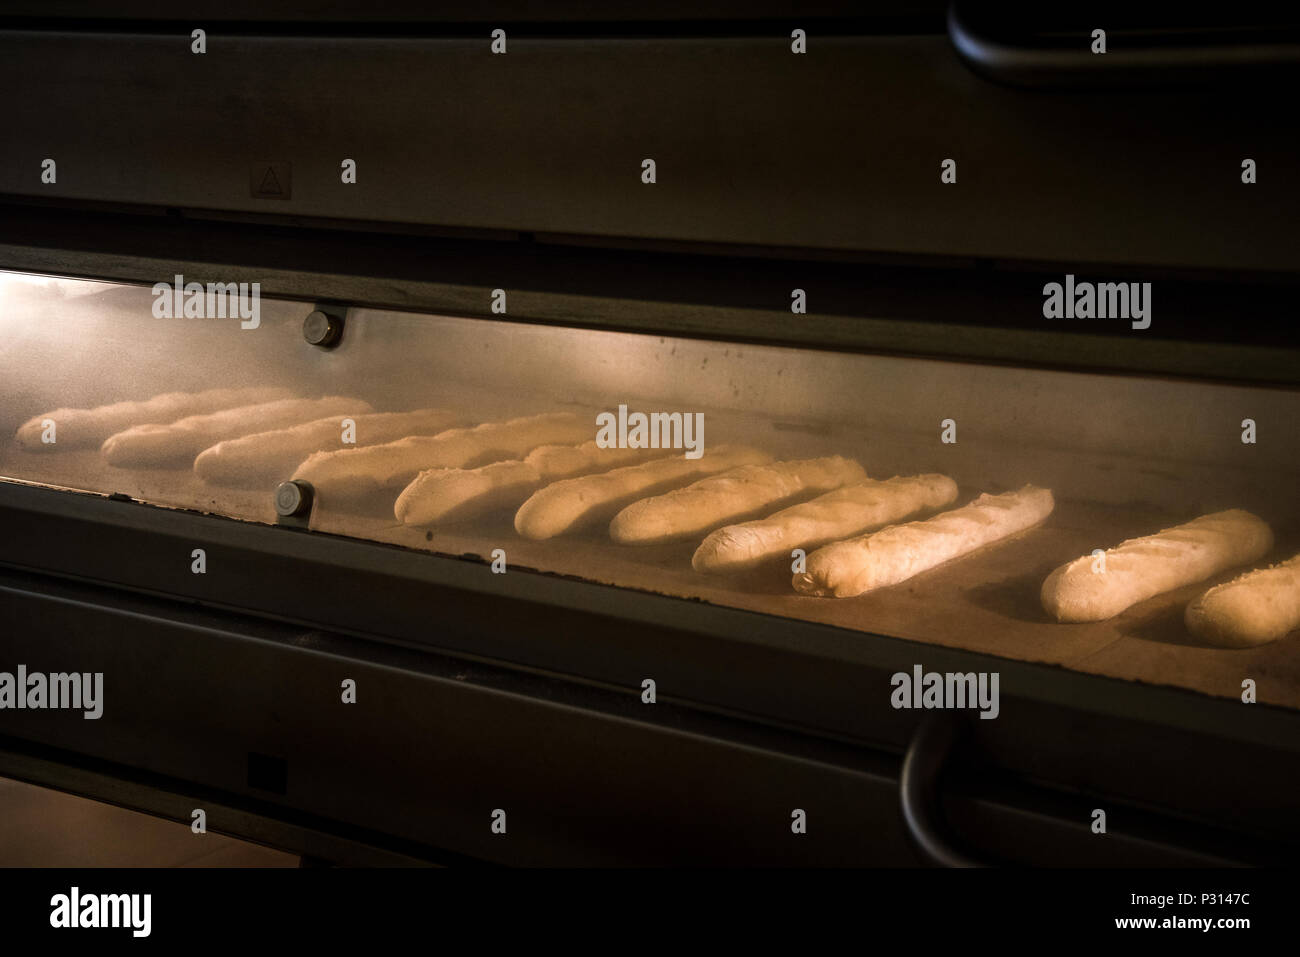 Baguette im Ofen Stockfotografie - Alamy